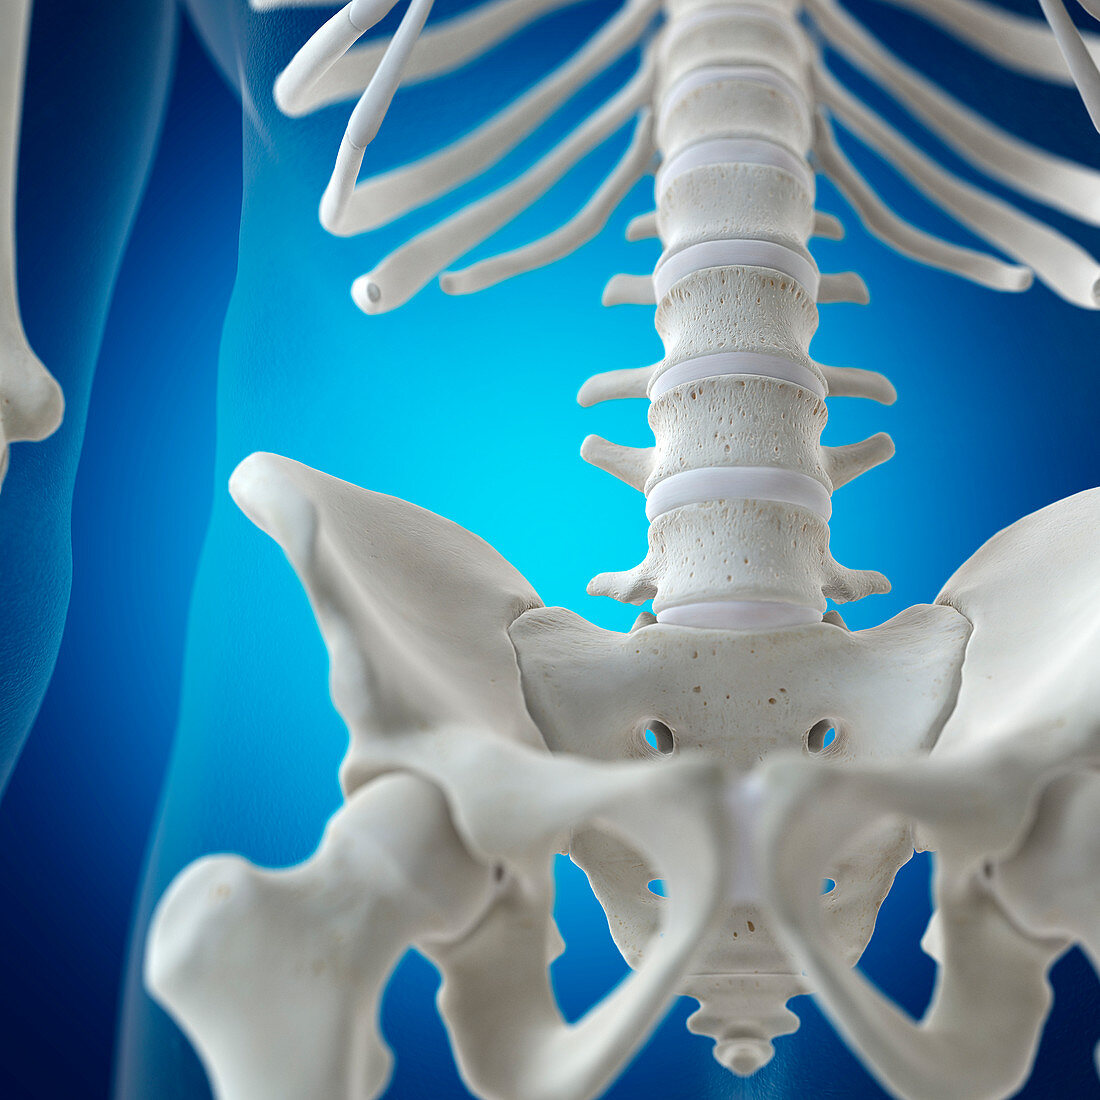 Illustration of the lumbar spine